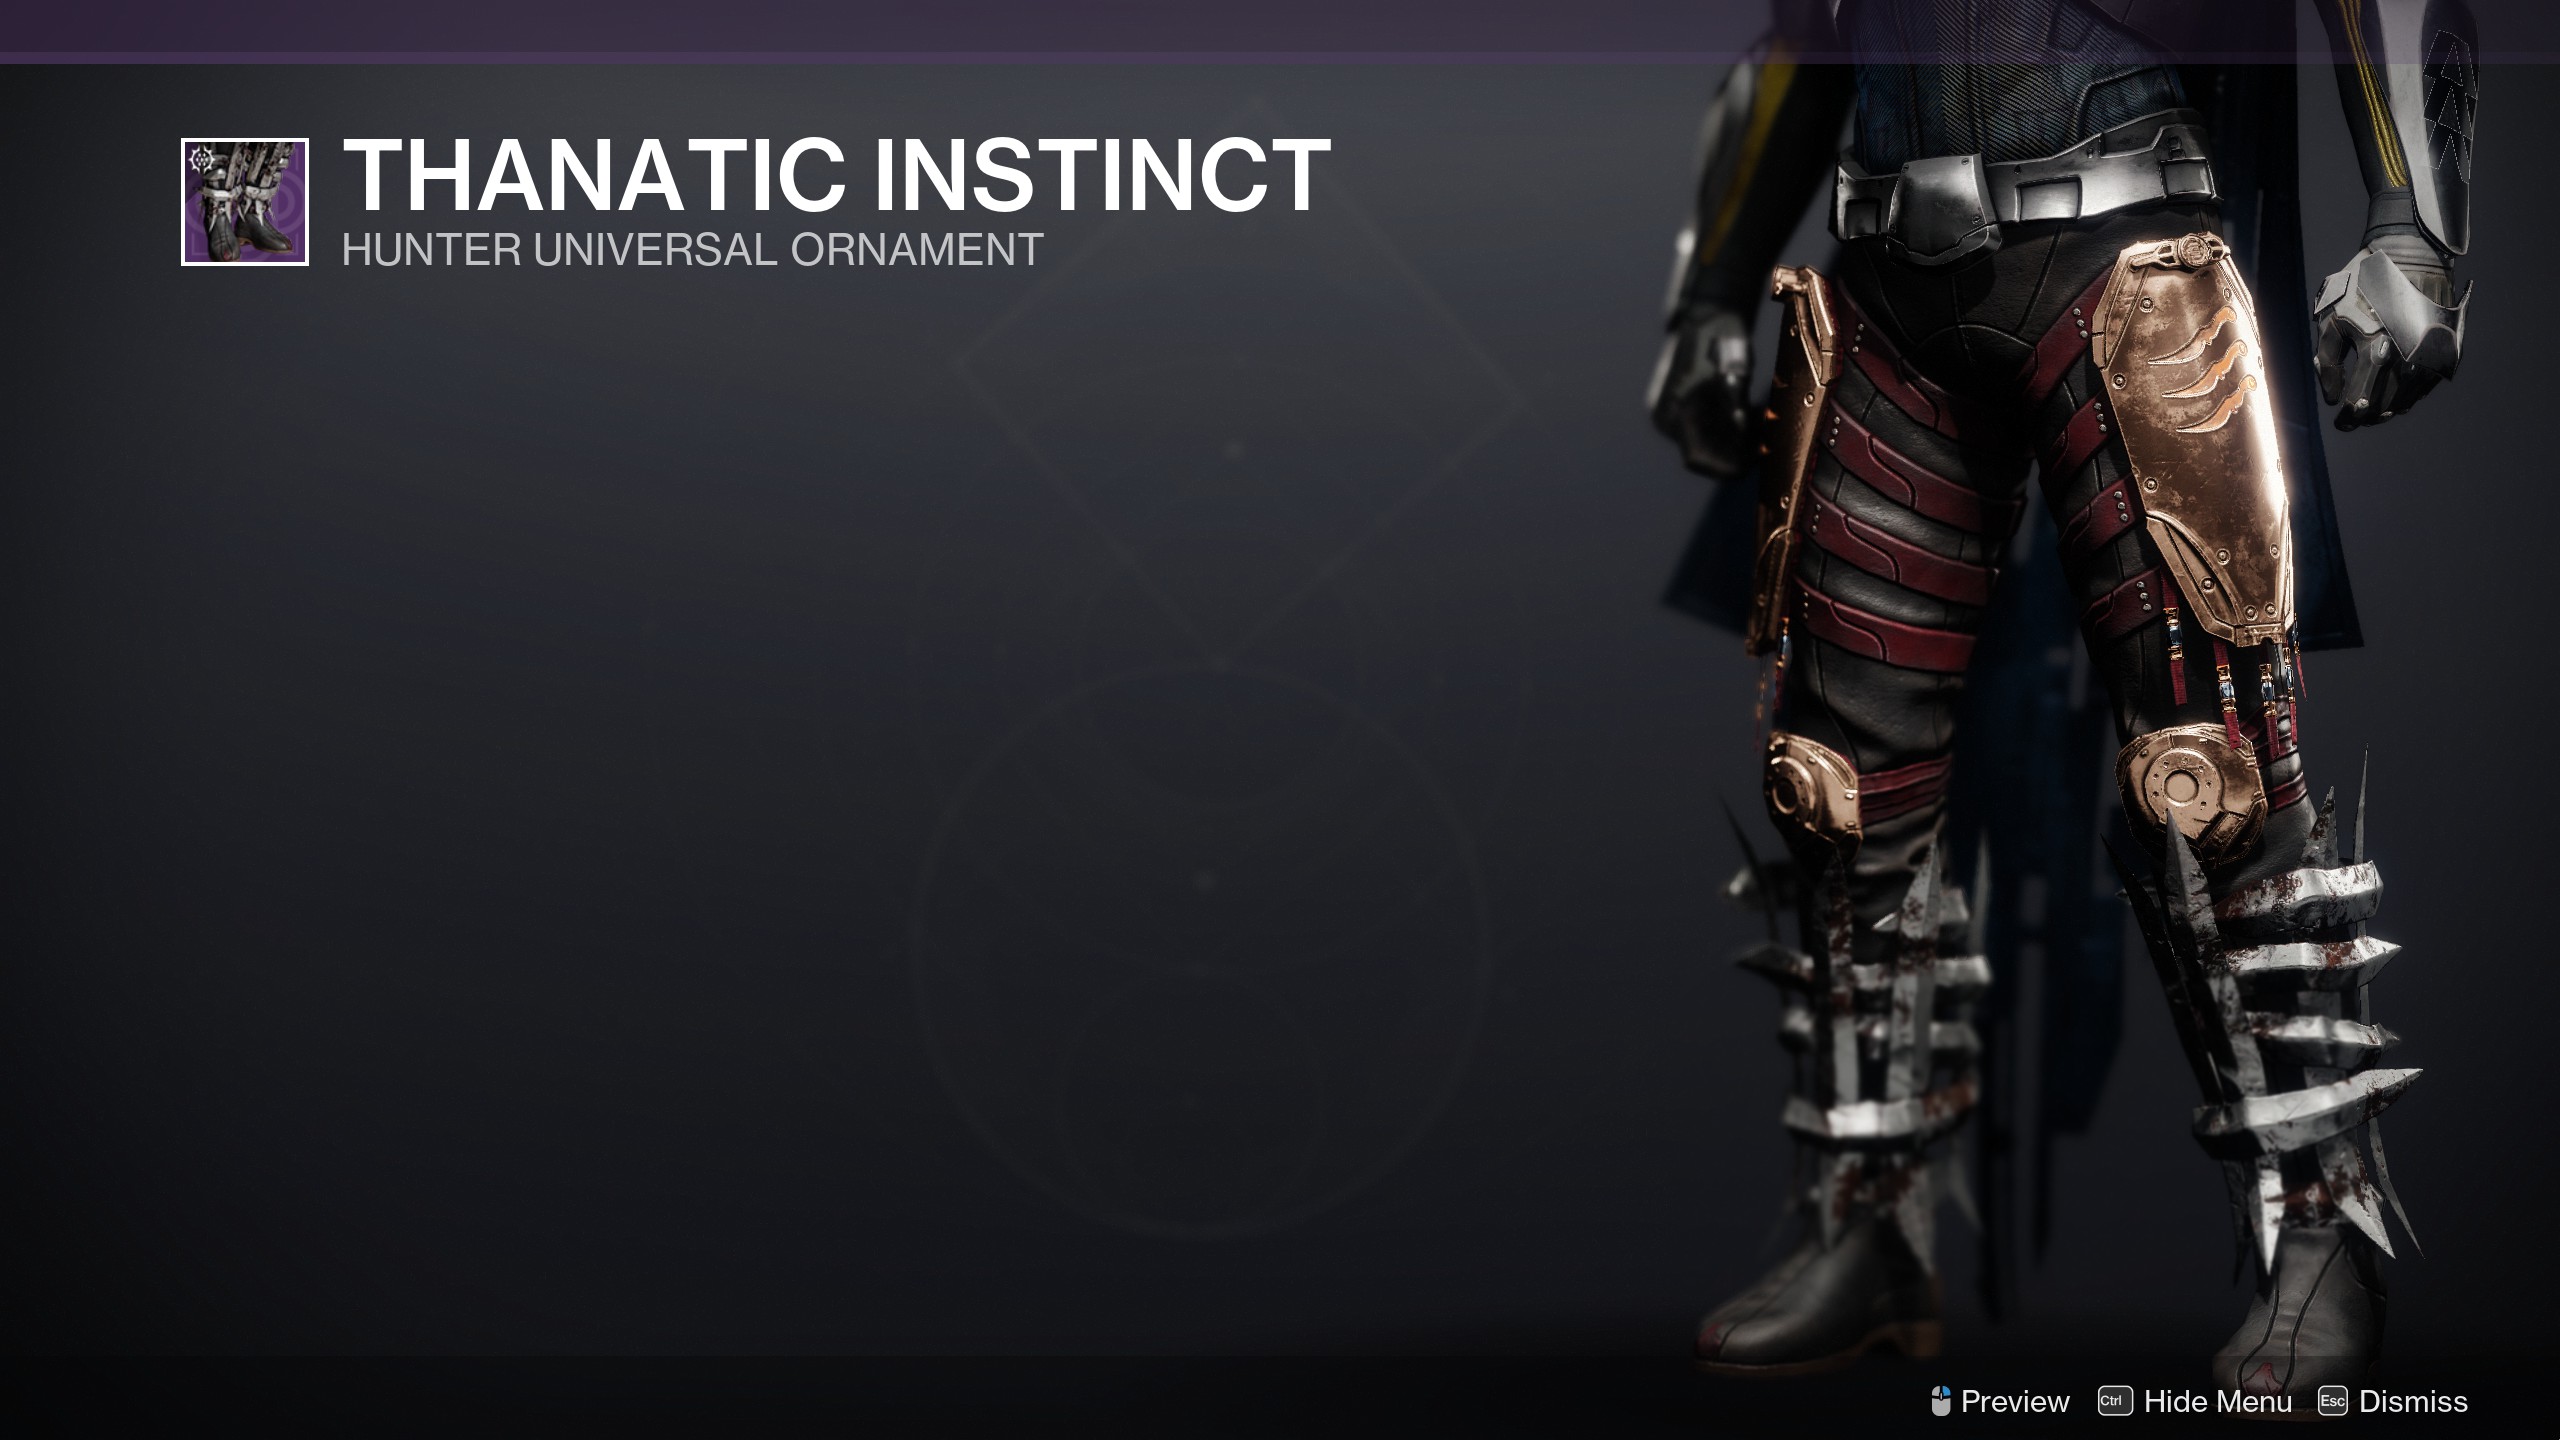 Destiny 2 Thanatic Instinct ornament